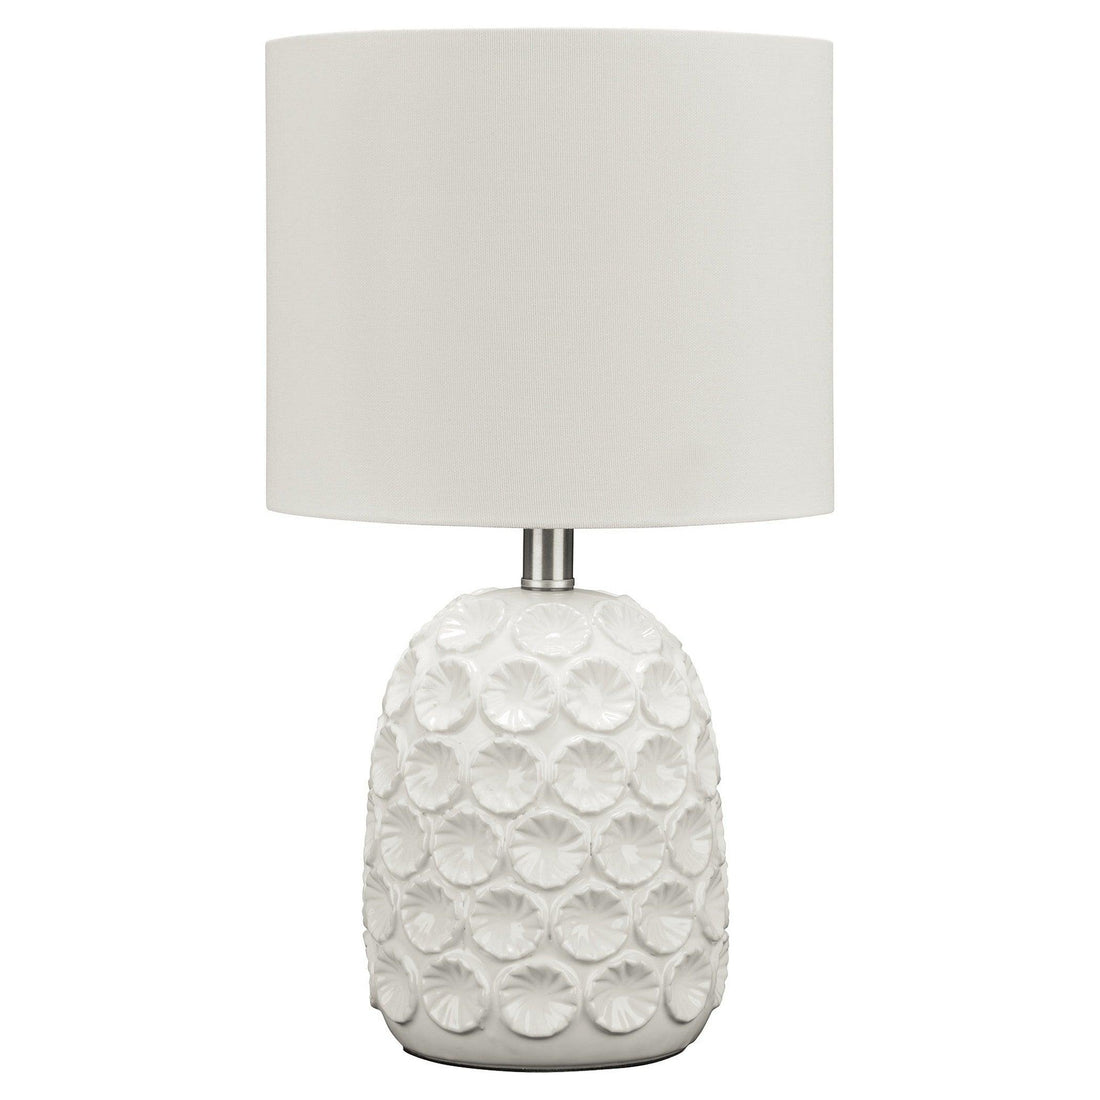 Moorbank Table Lamp Ash-L180064